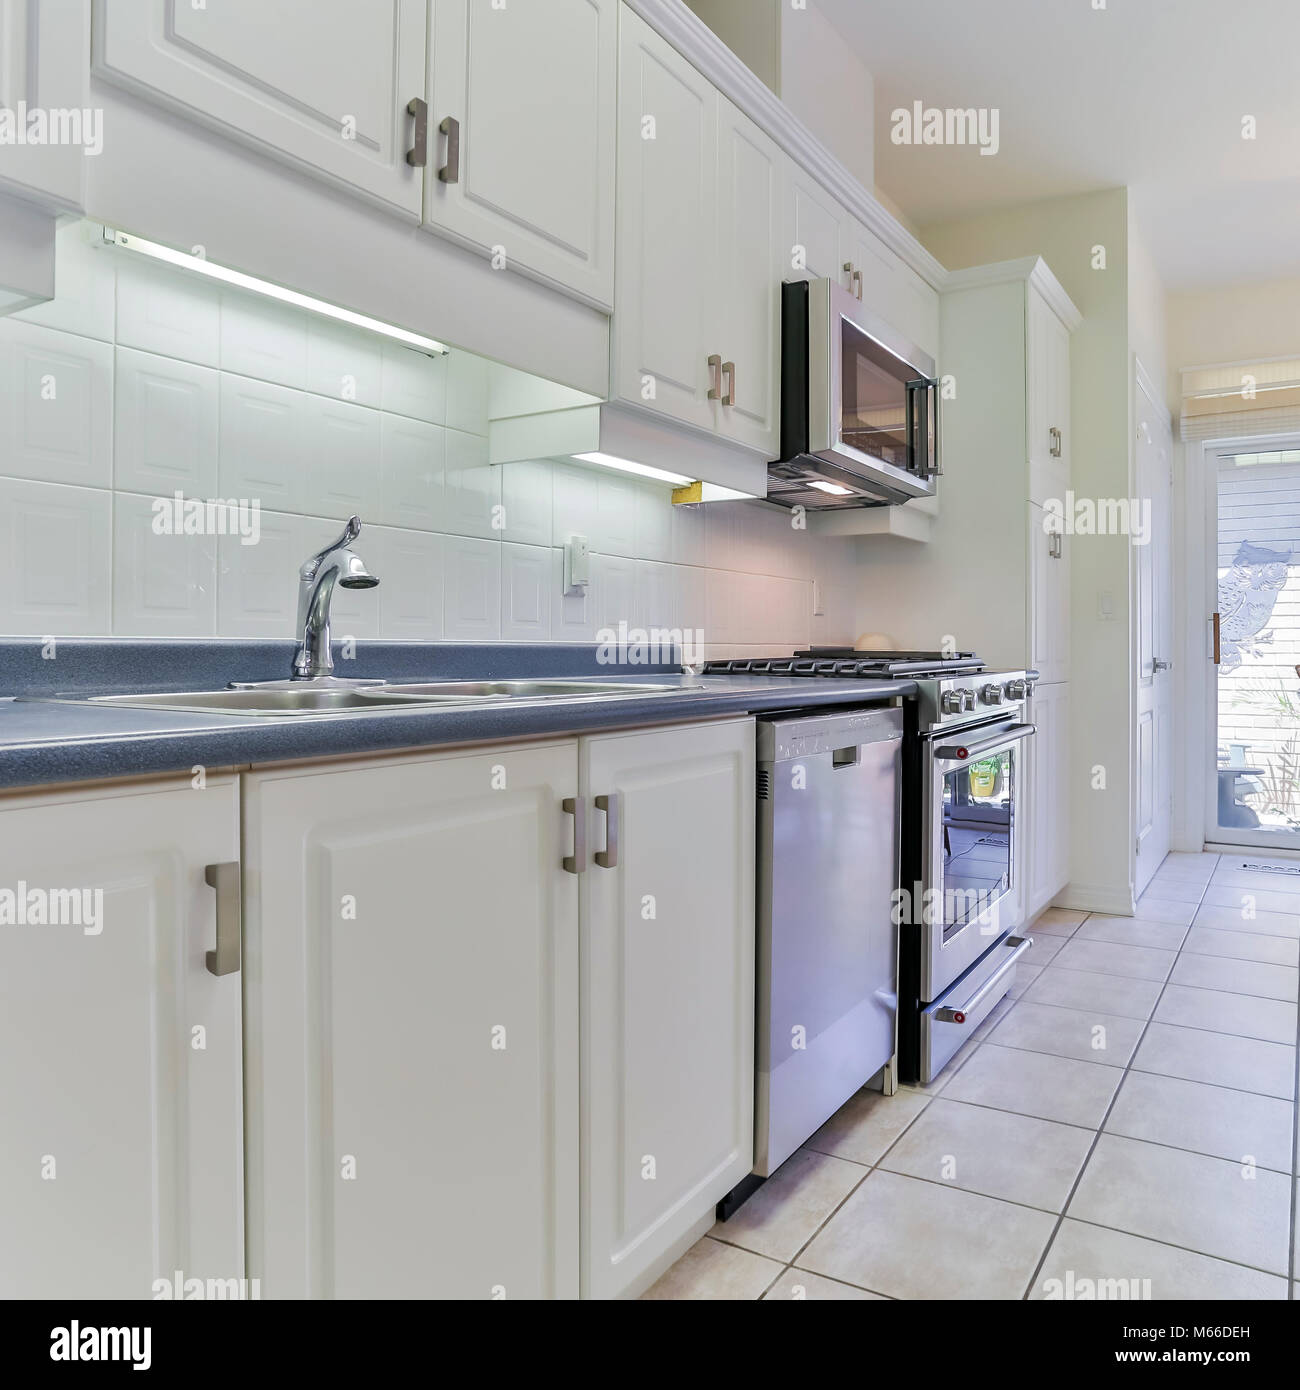 Kitchen interior design in new luxury home Stock Photo